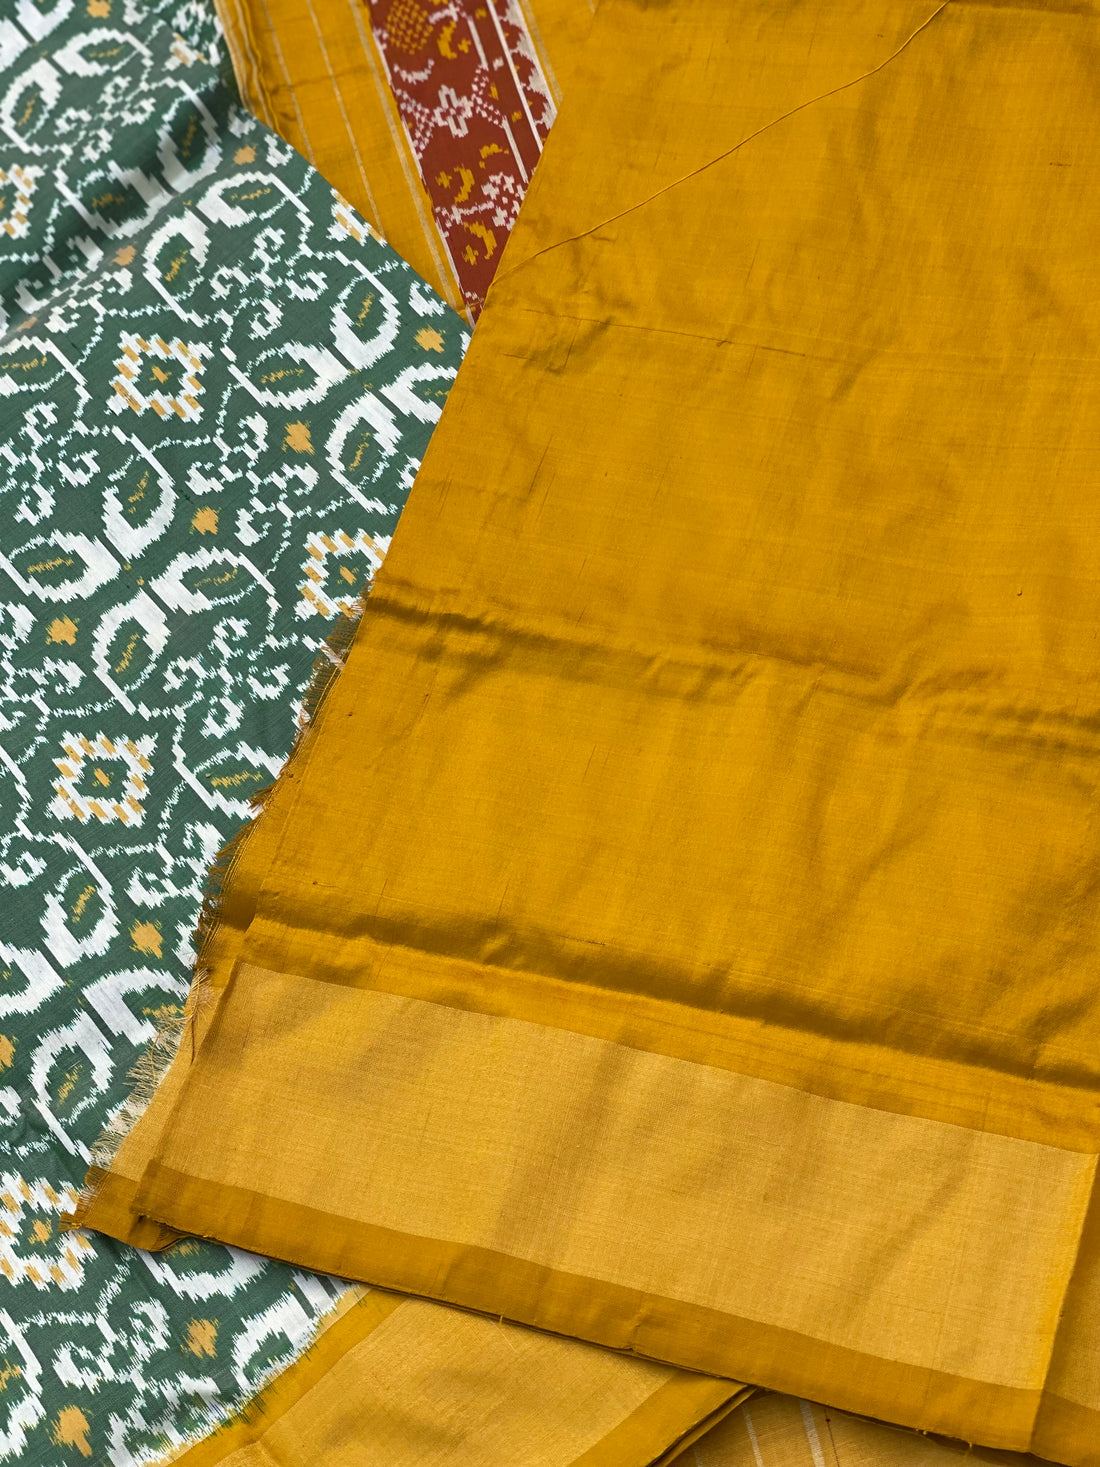 Single Ikkat silk saree with green and mustard yellow